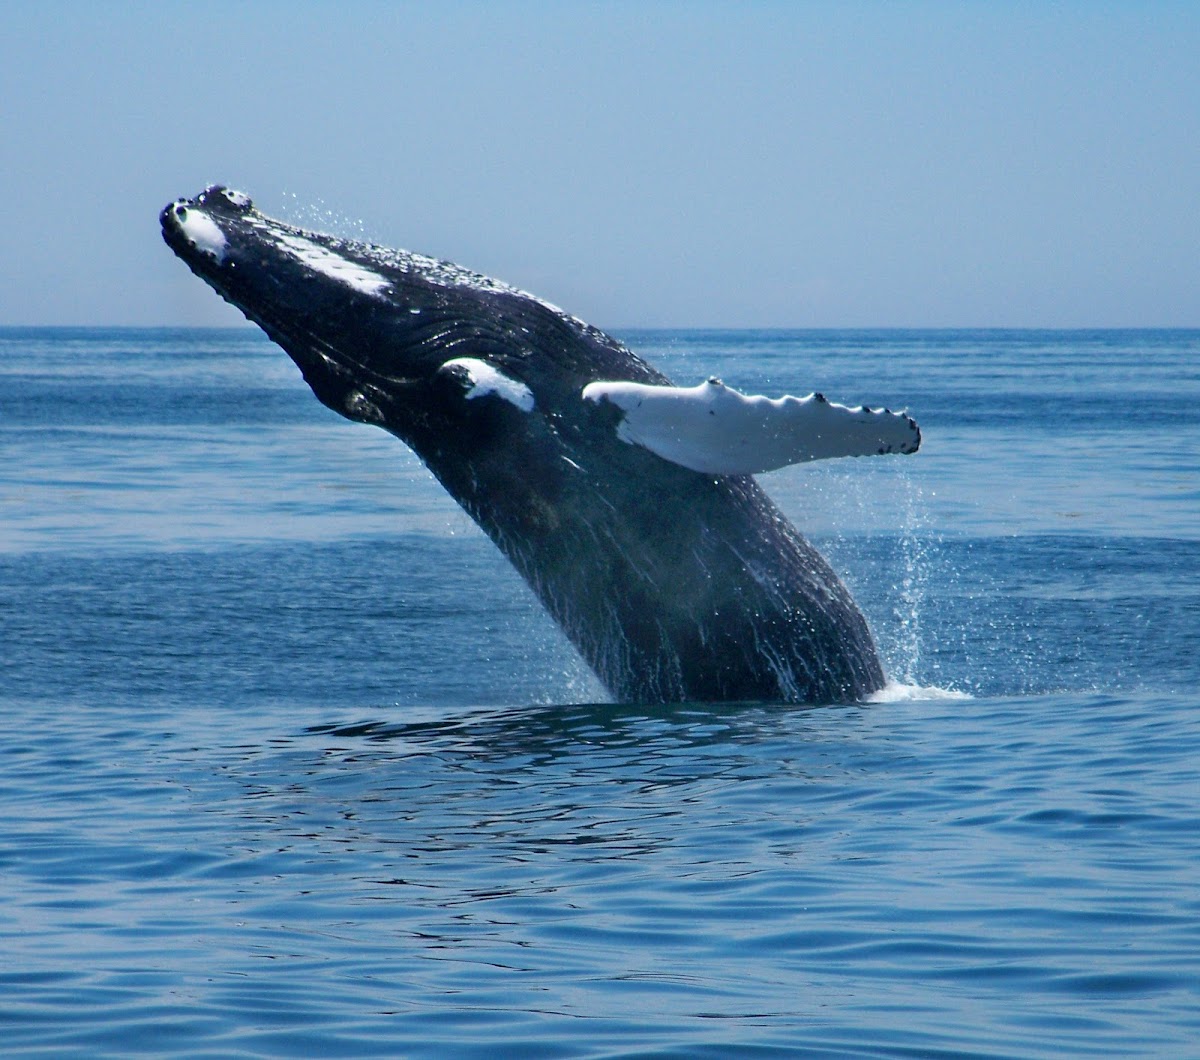 Gray Humpback Whale